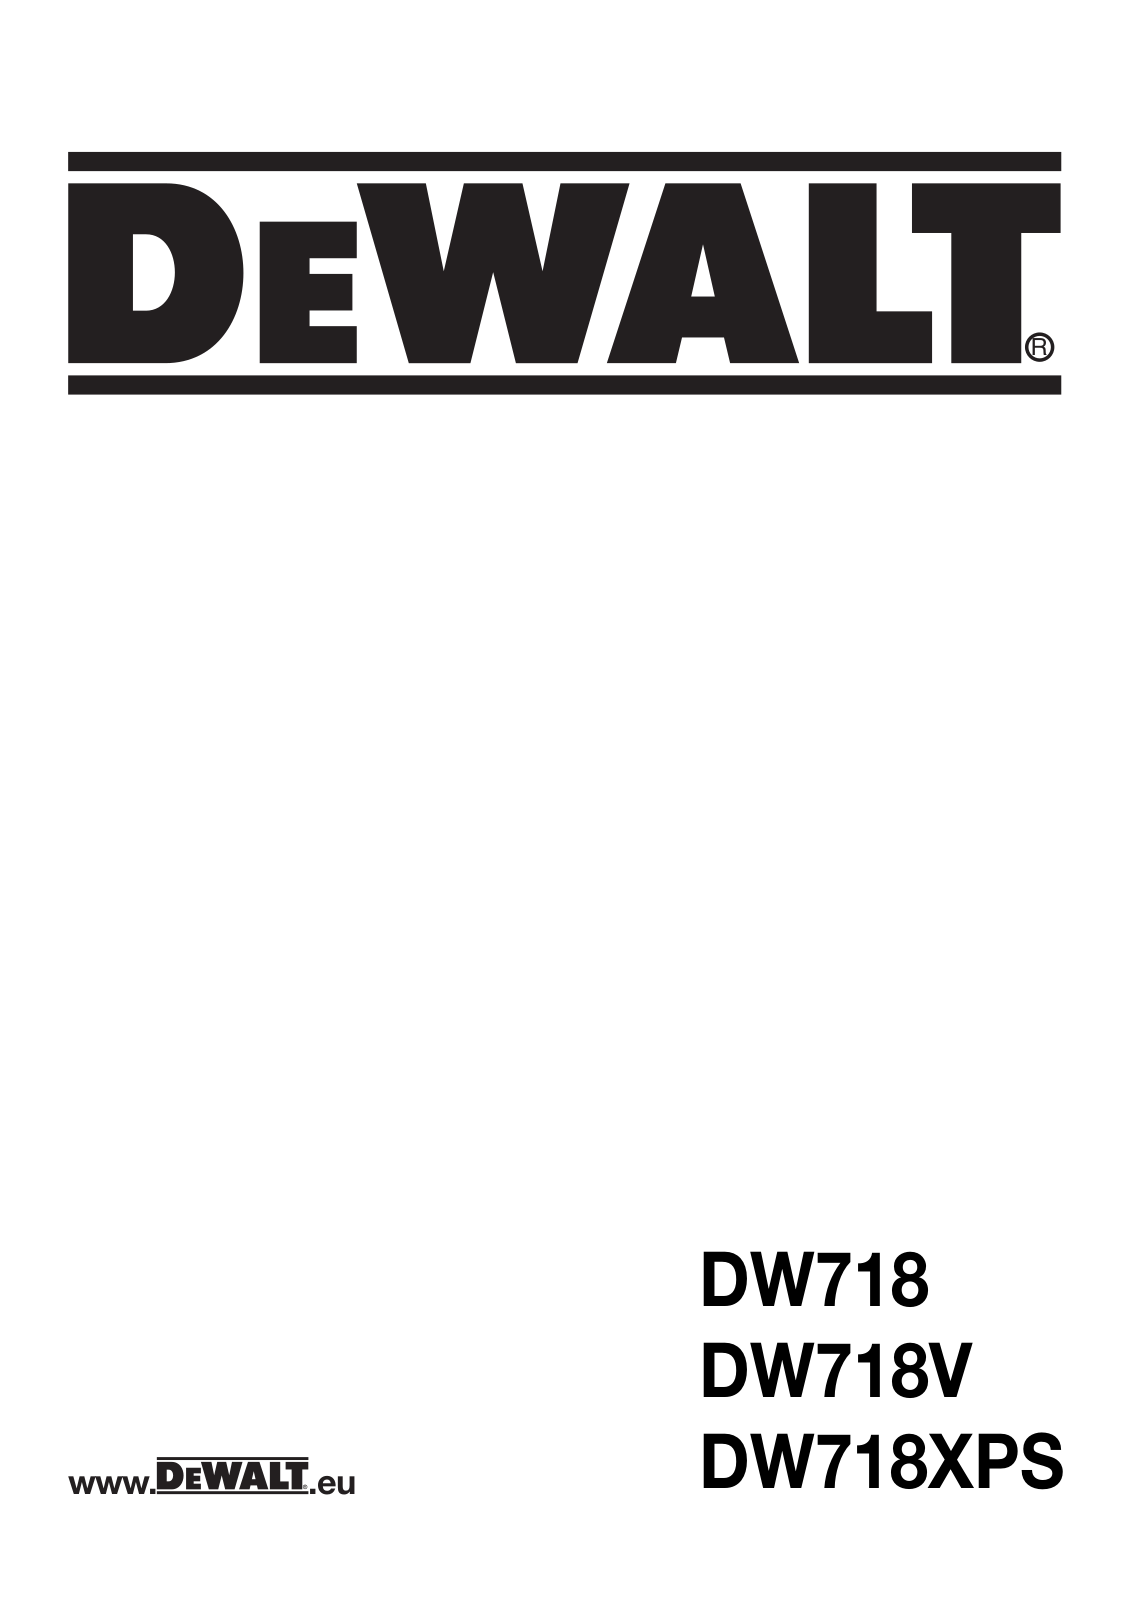 DeWalt DW718XPS, DW718, DW718V User Manual